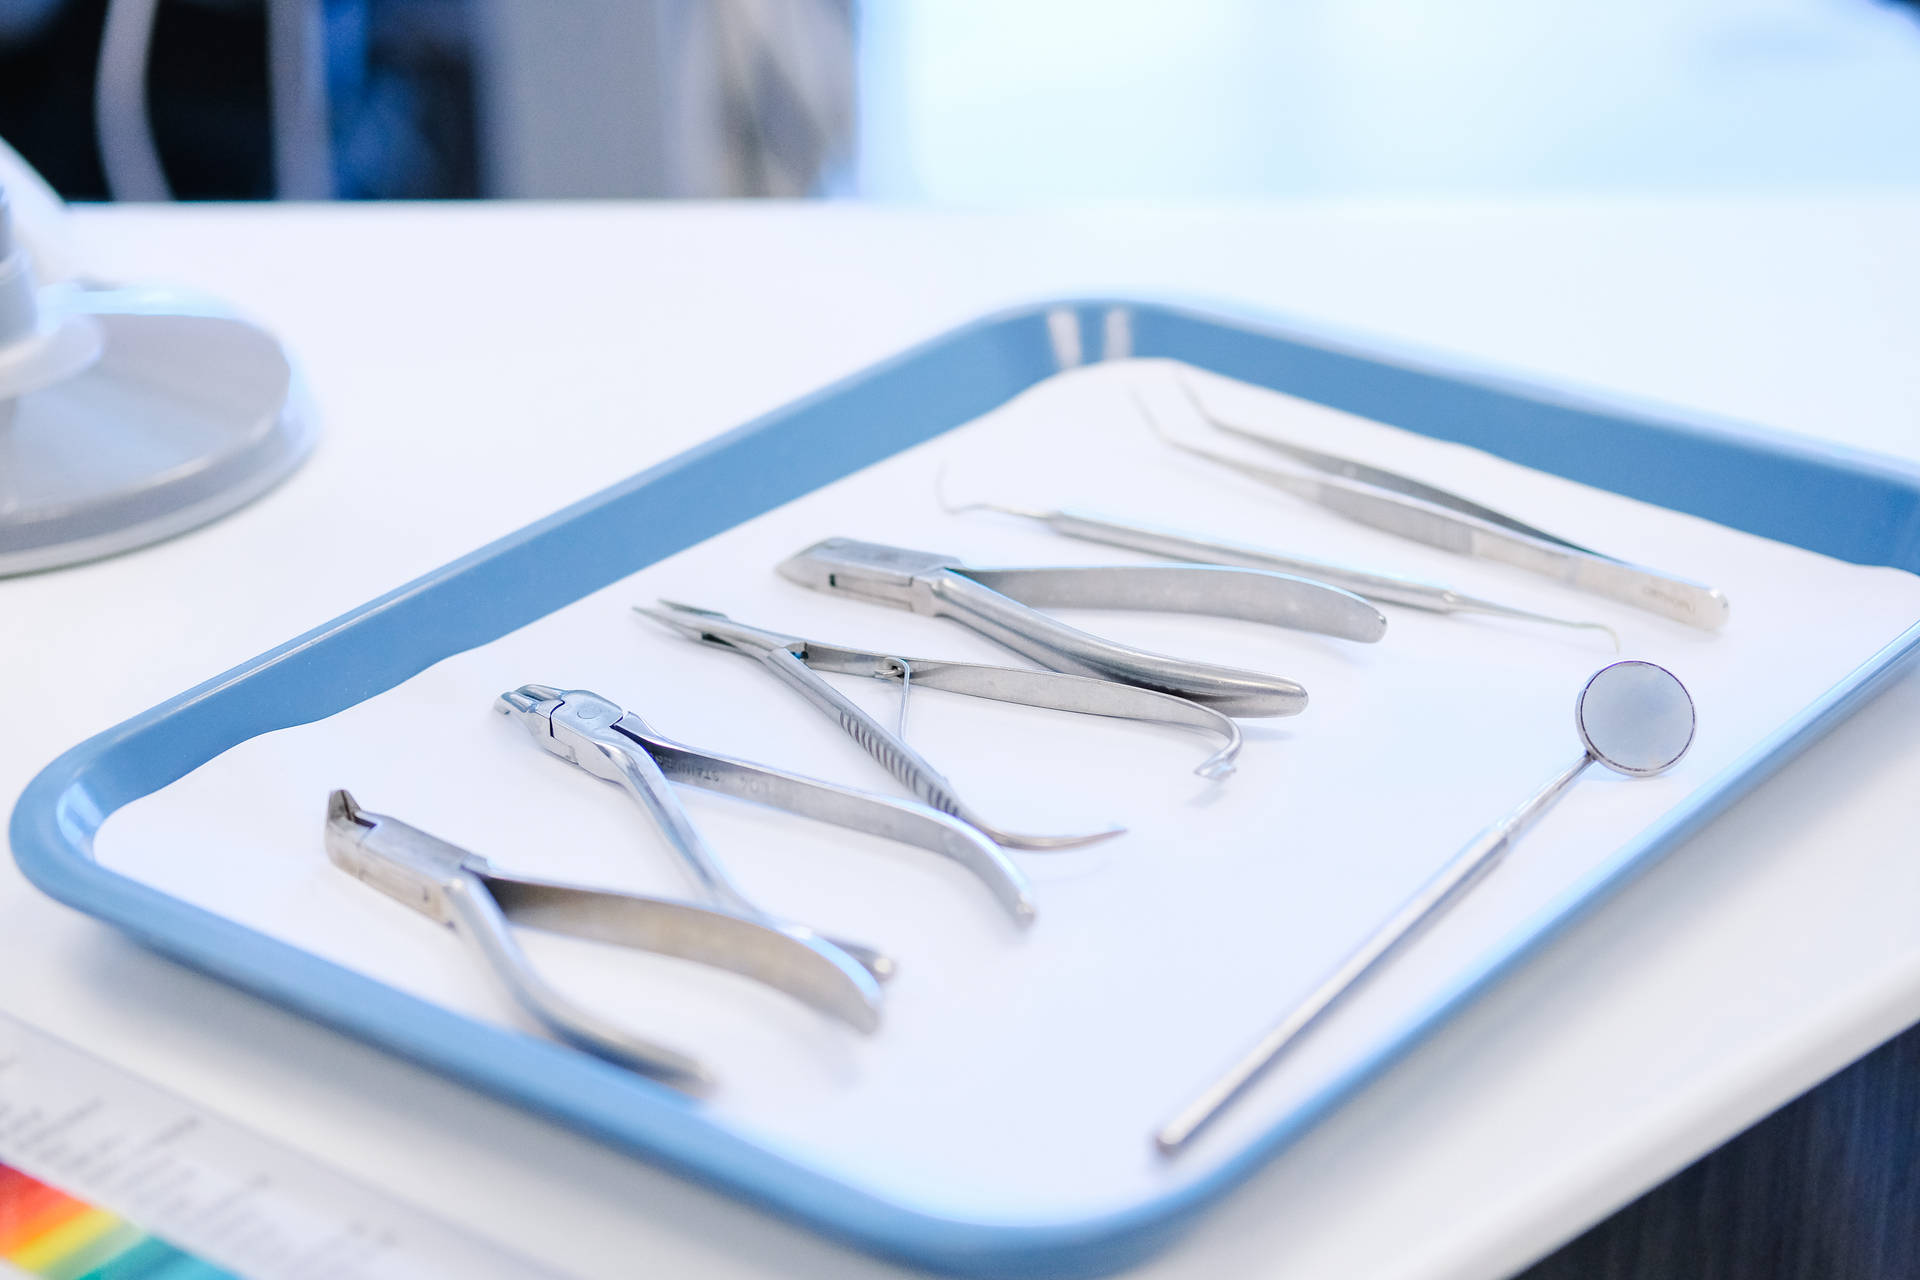 Dentistry Tools On Blue Tray Wallpaper